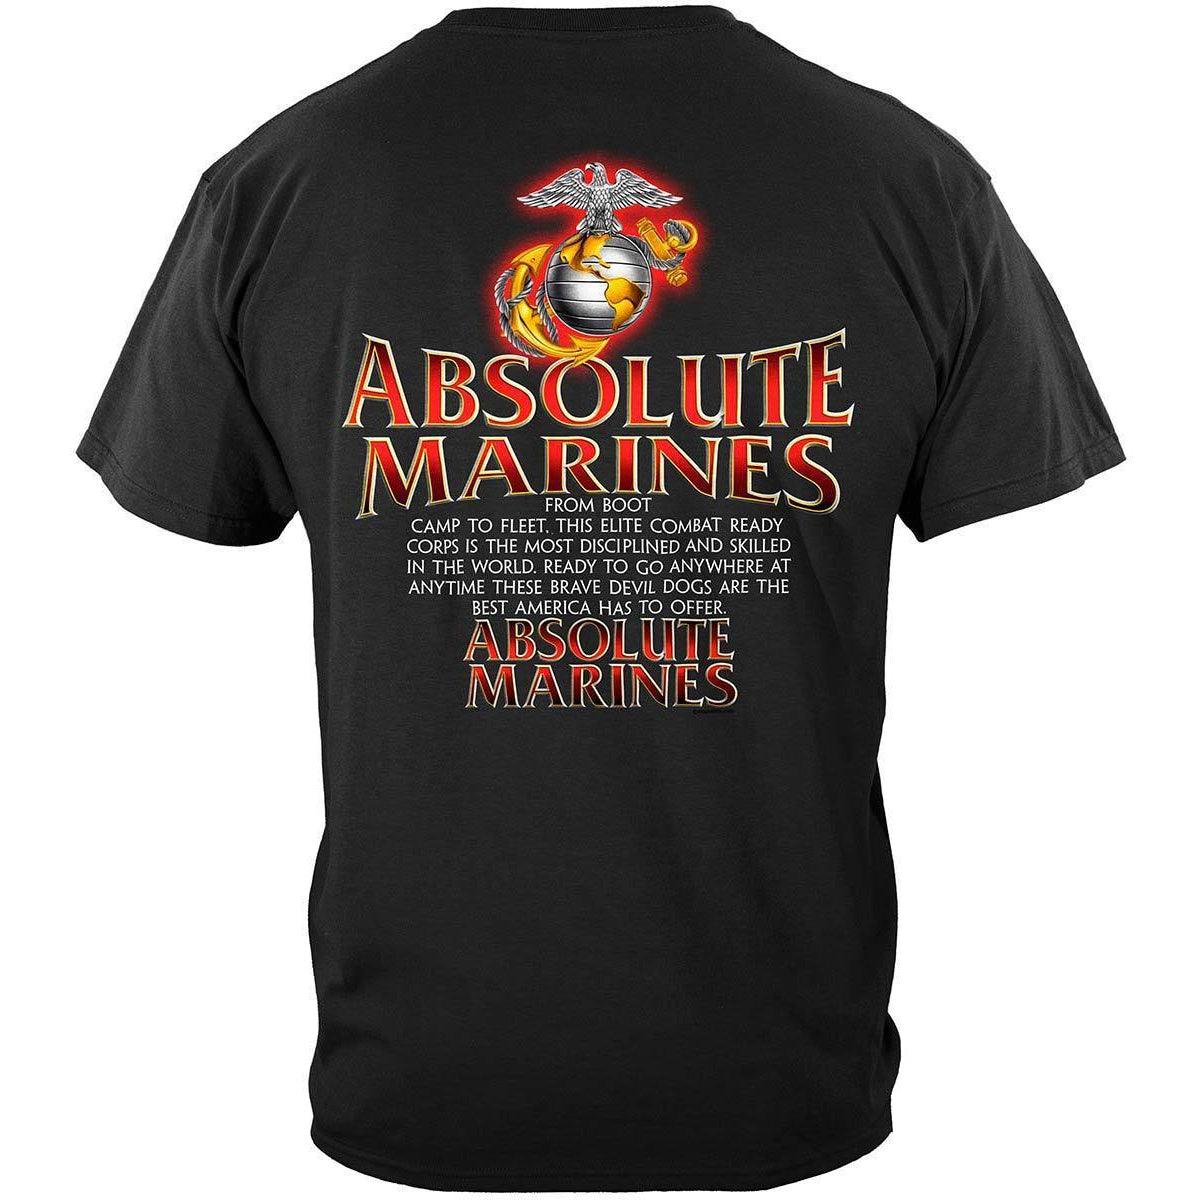 Absolute Marine Corps Premium Long Sleeves - Military Republic